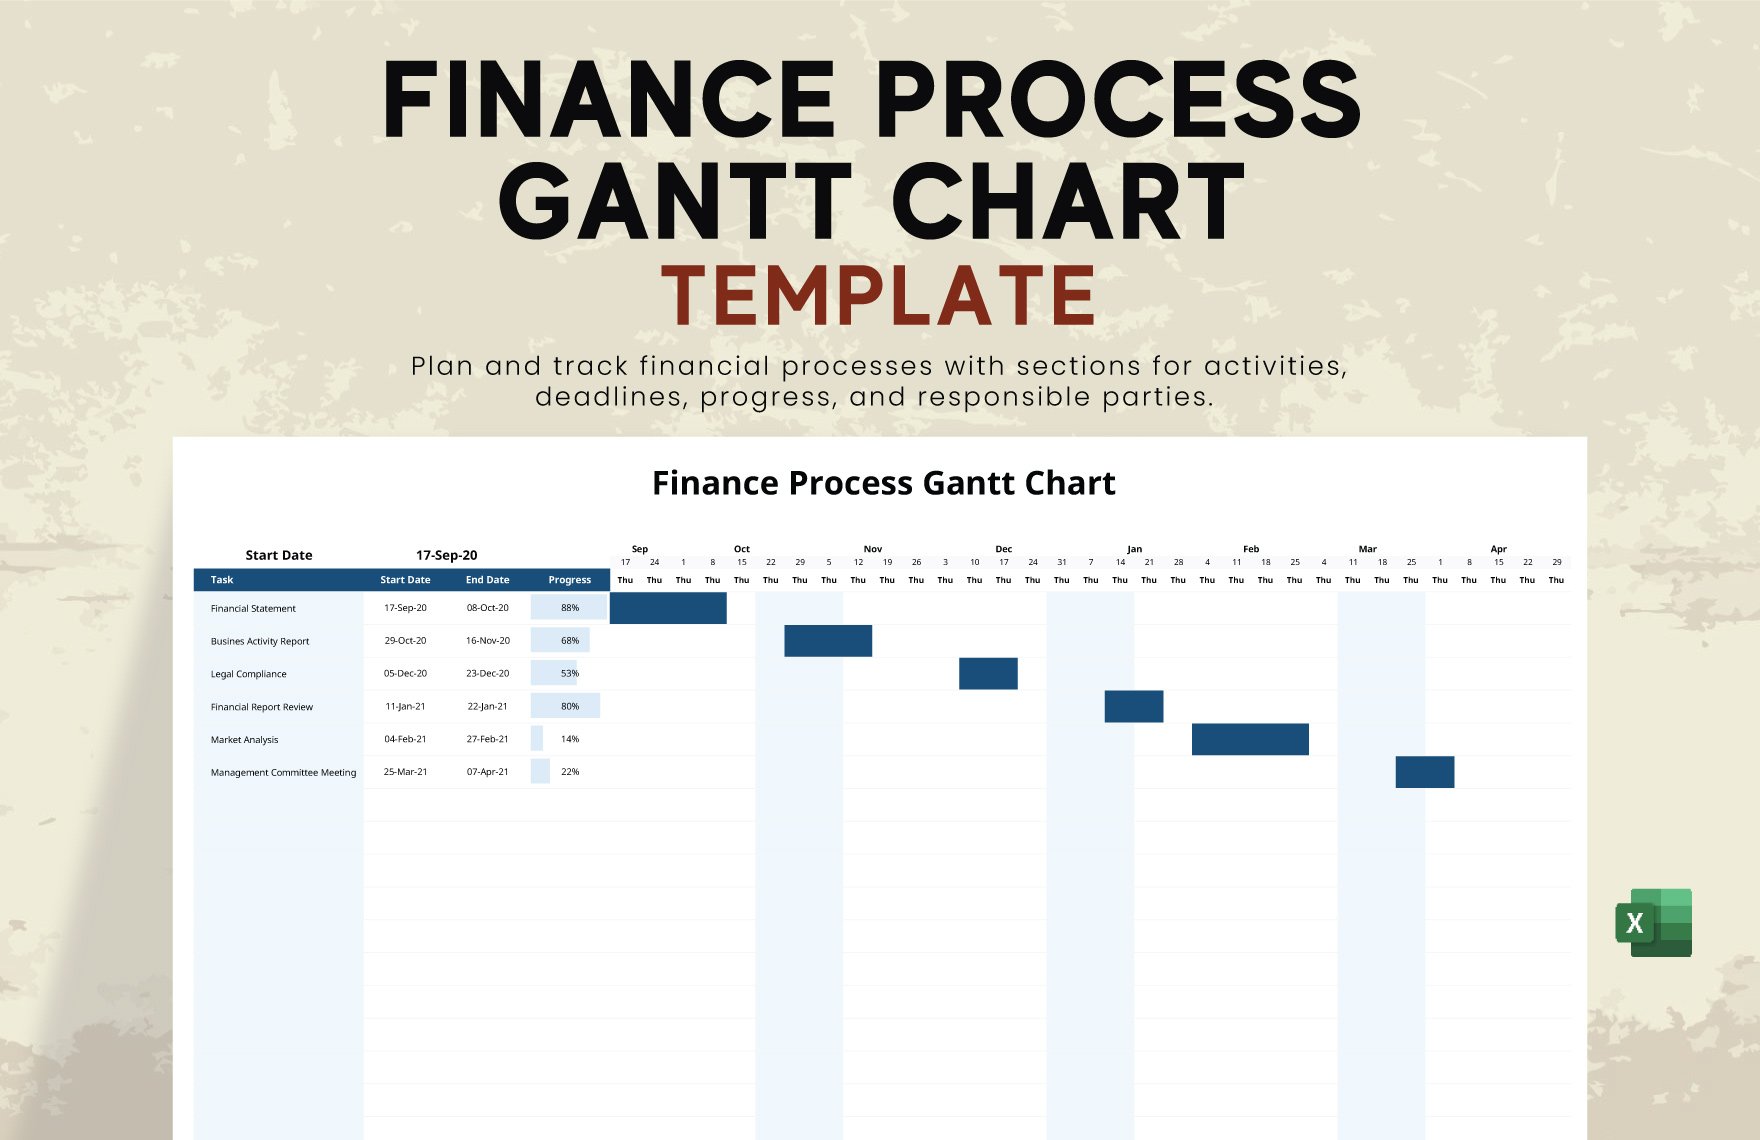 Finance Process Gantt Chart Template in Excel